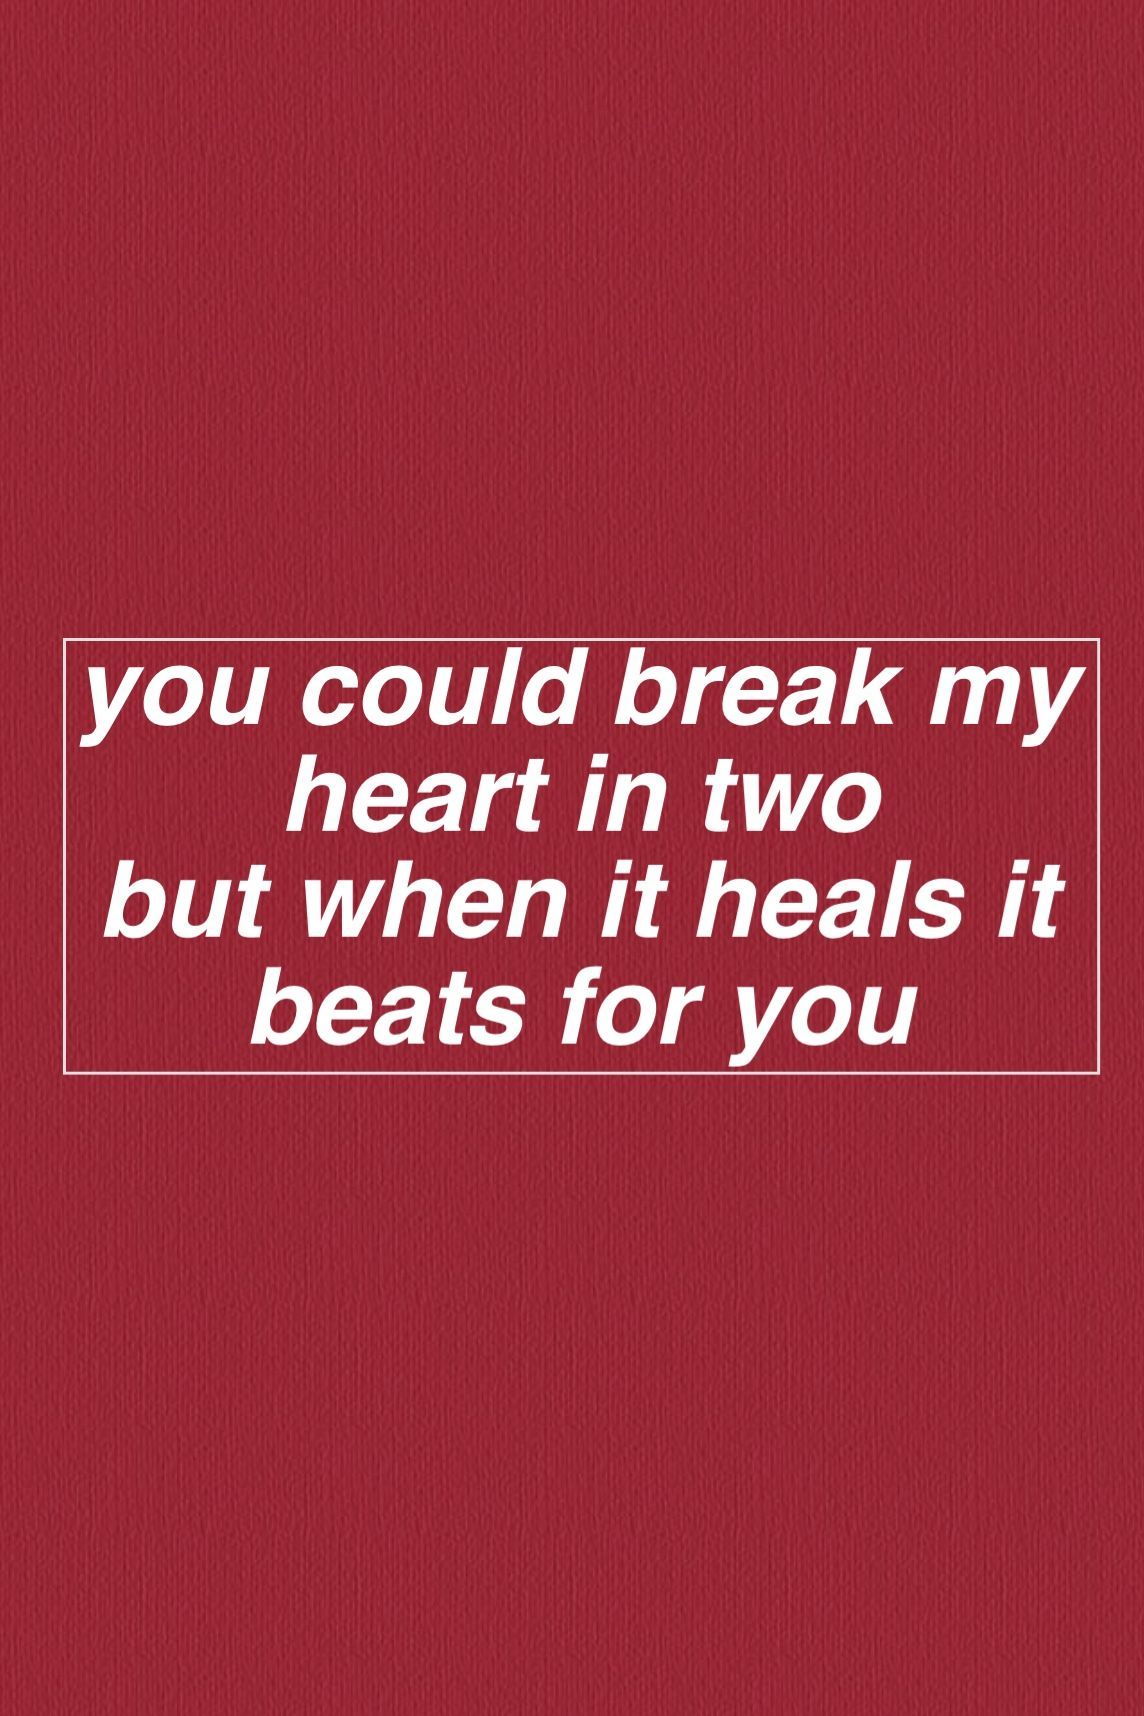 You could break my heart in two but when it heals it beats for you. -   25 selena gomez lyrics
 ideas